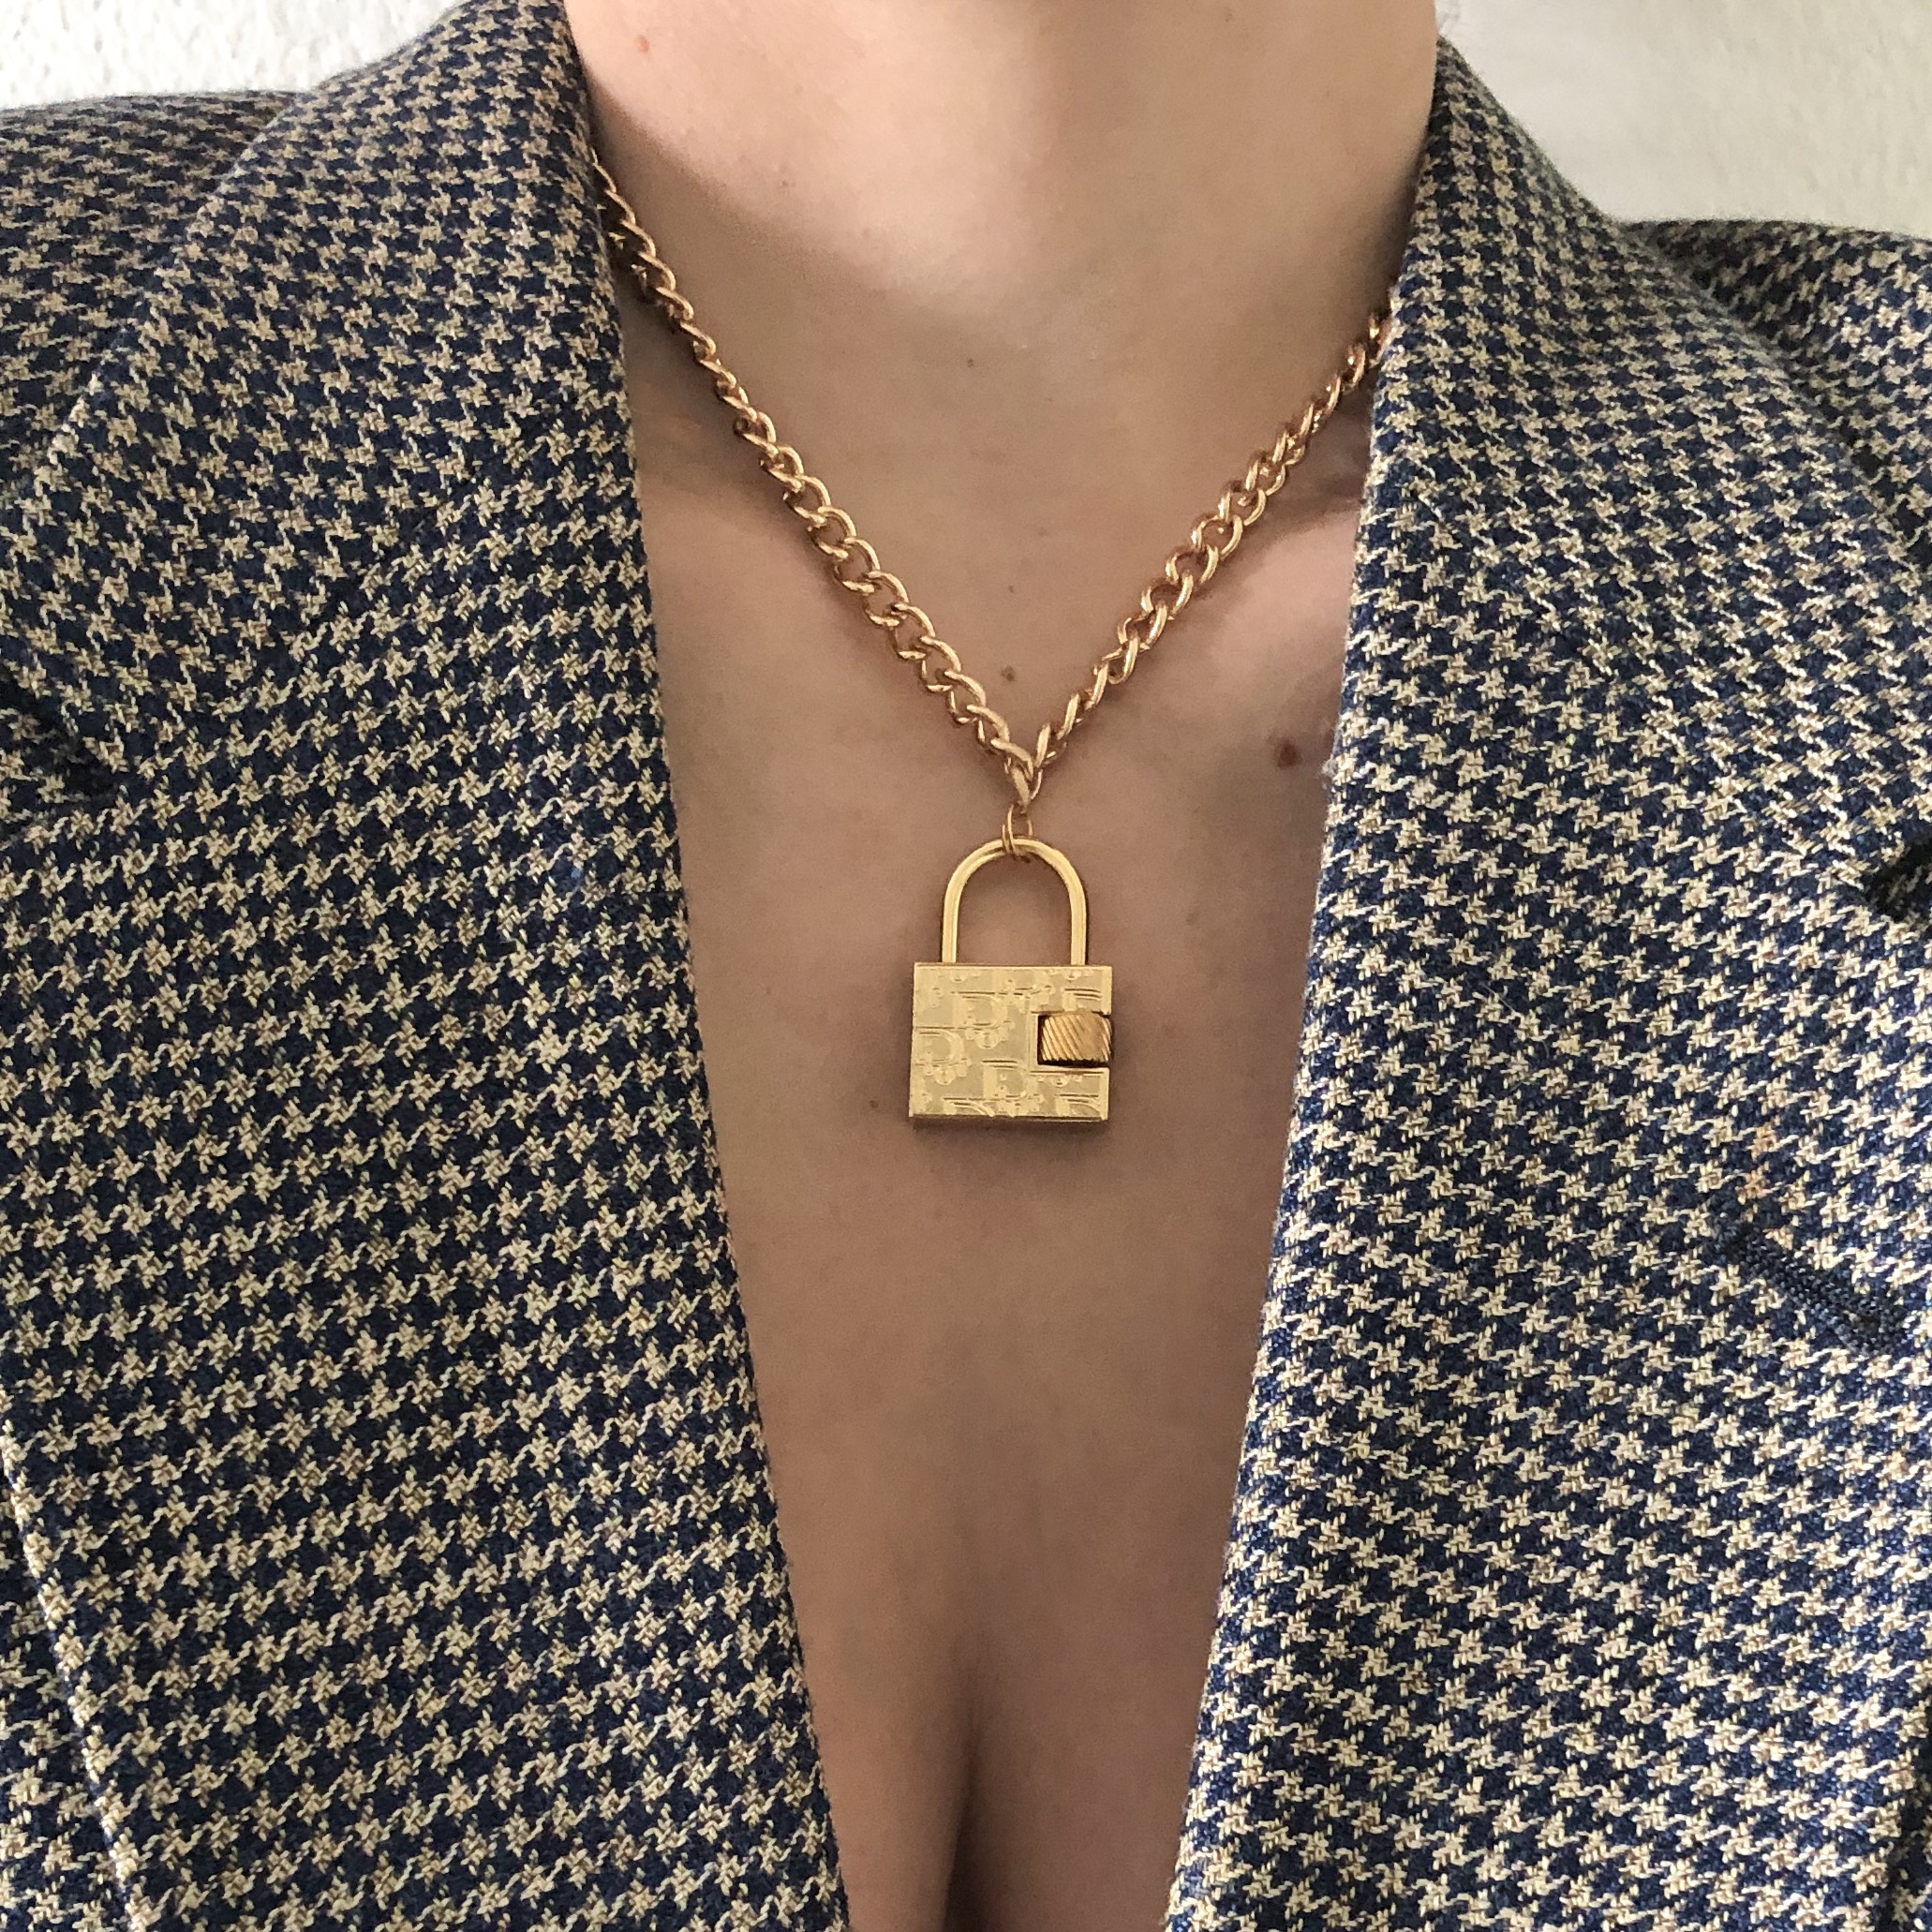 dior lock necklace price